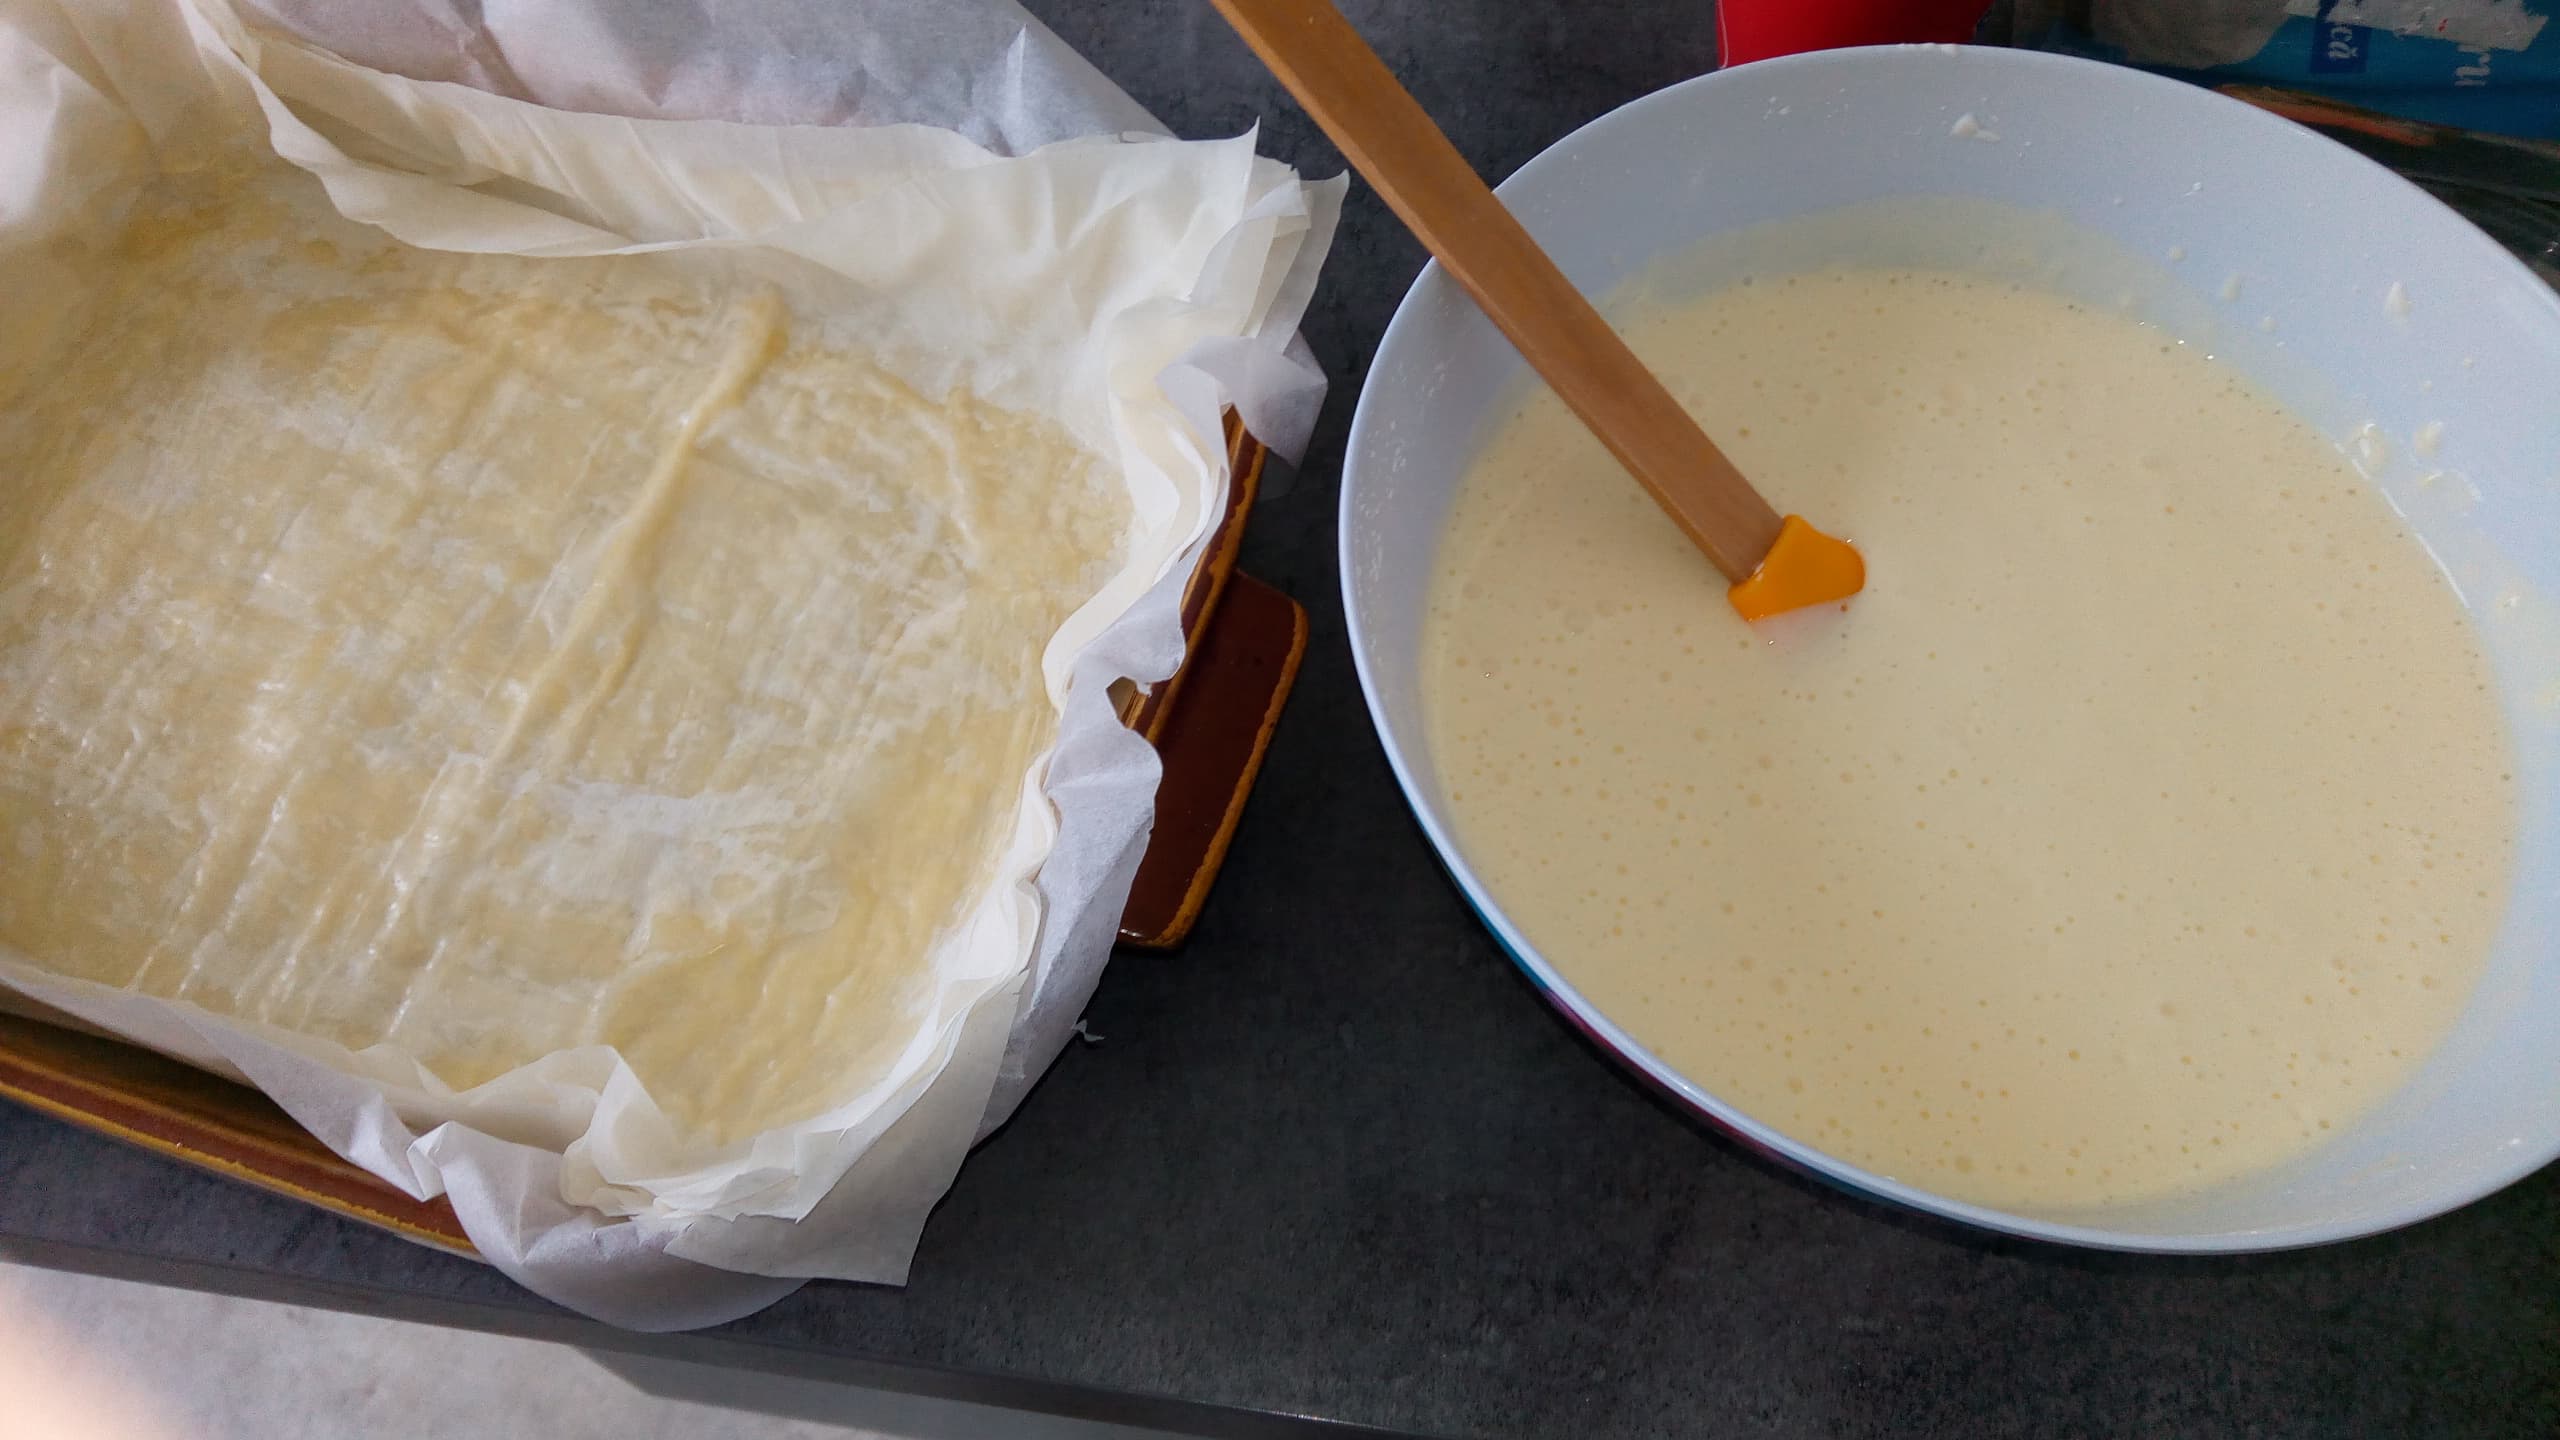 Desert placinta cu crema de branza (fromage blanc)